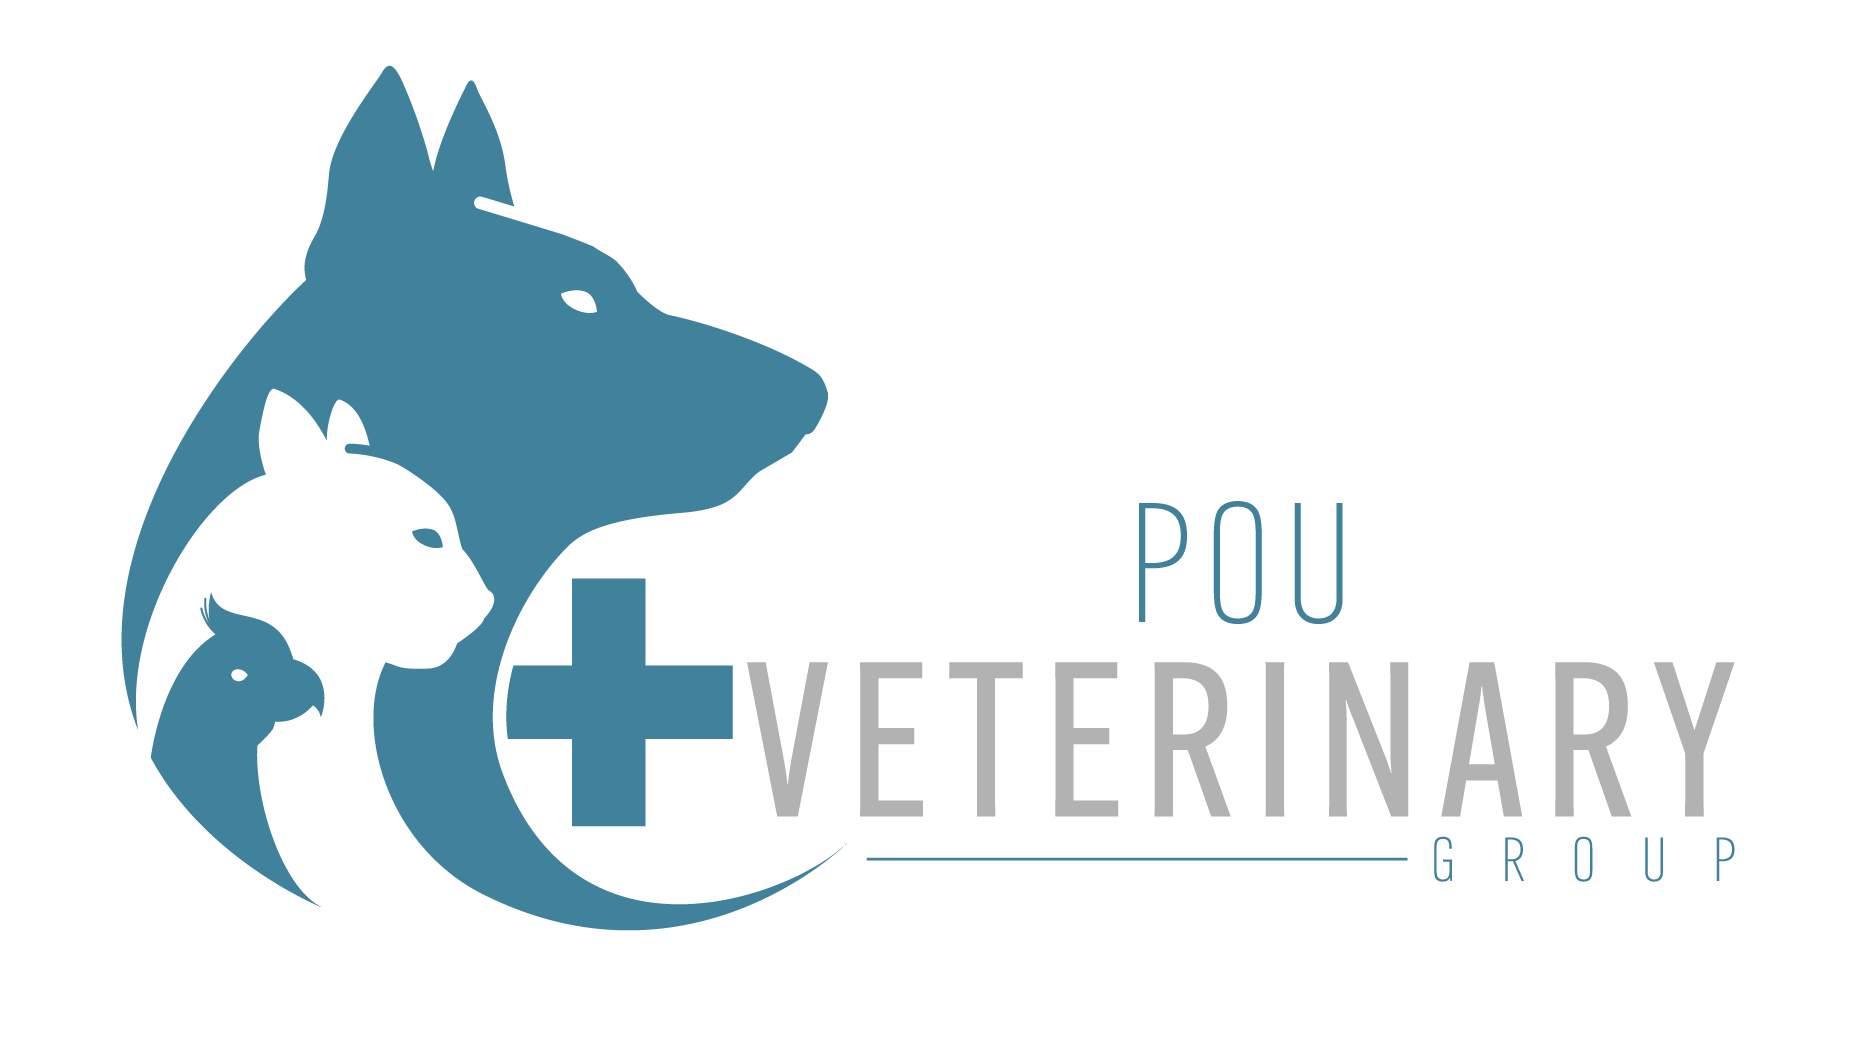 Pou Veterinary Group Logo